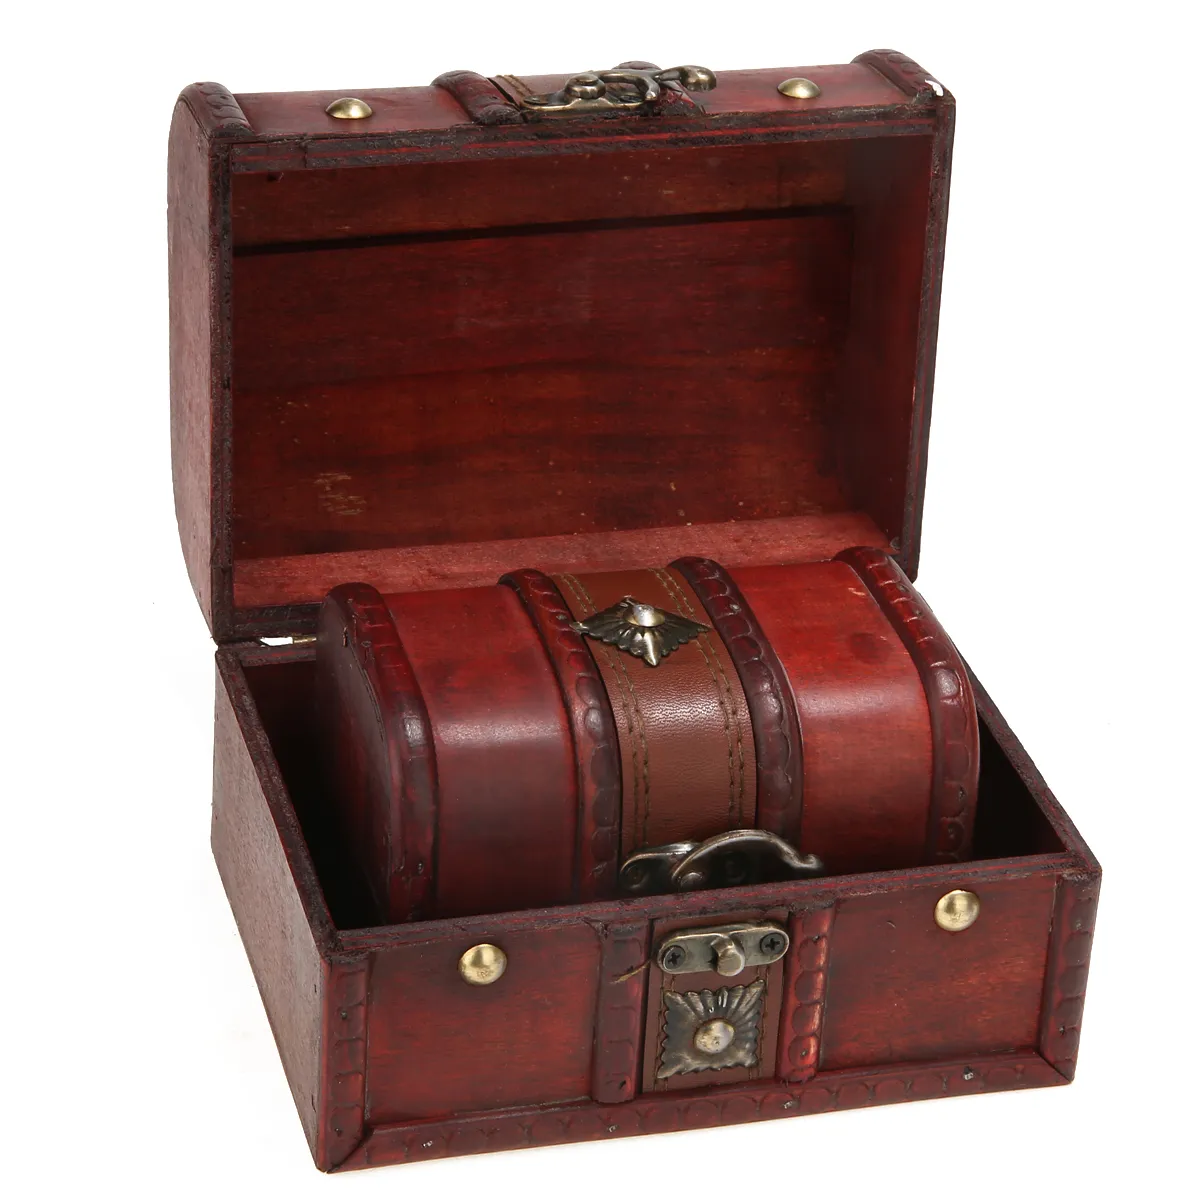 2st Vintage Wood Case Jewelry Storage Box Liten Treasure Chest Wood Crate Case Home Lagringslådor 2103158019466